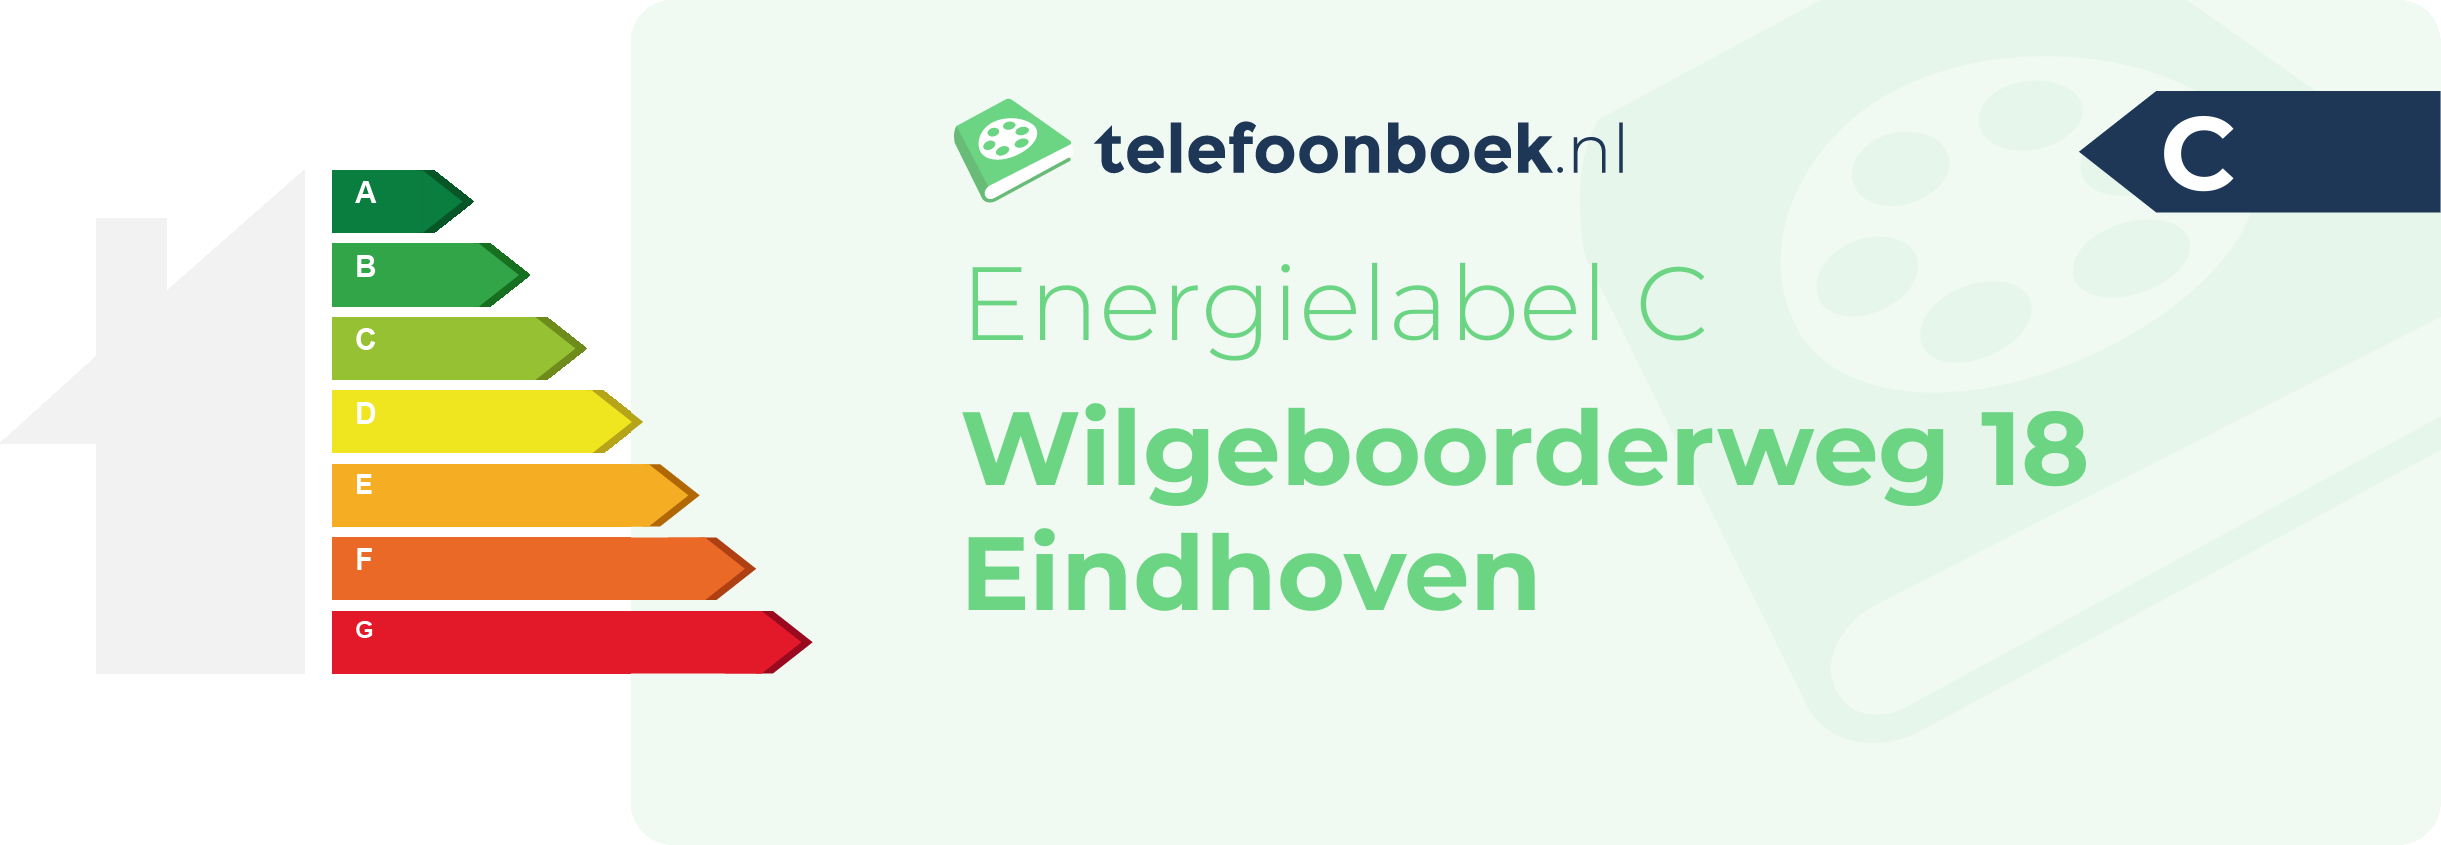 Energielabel Wilgeboorderweg 18 Eindhoven